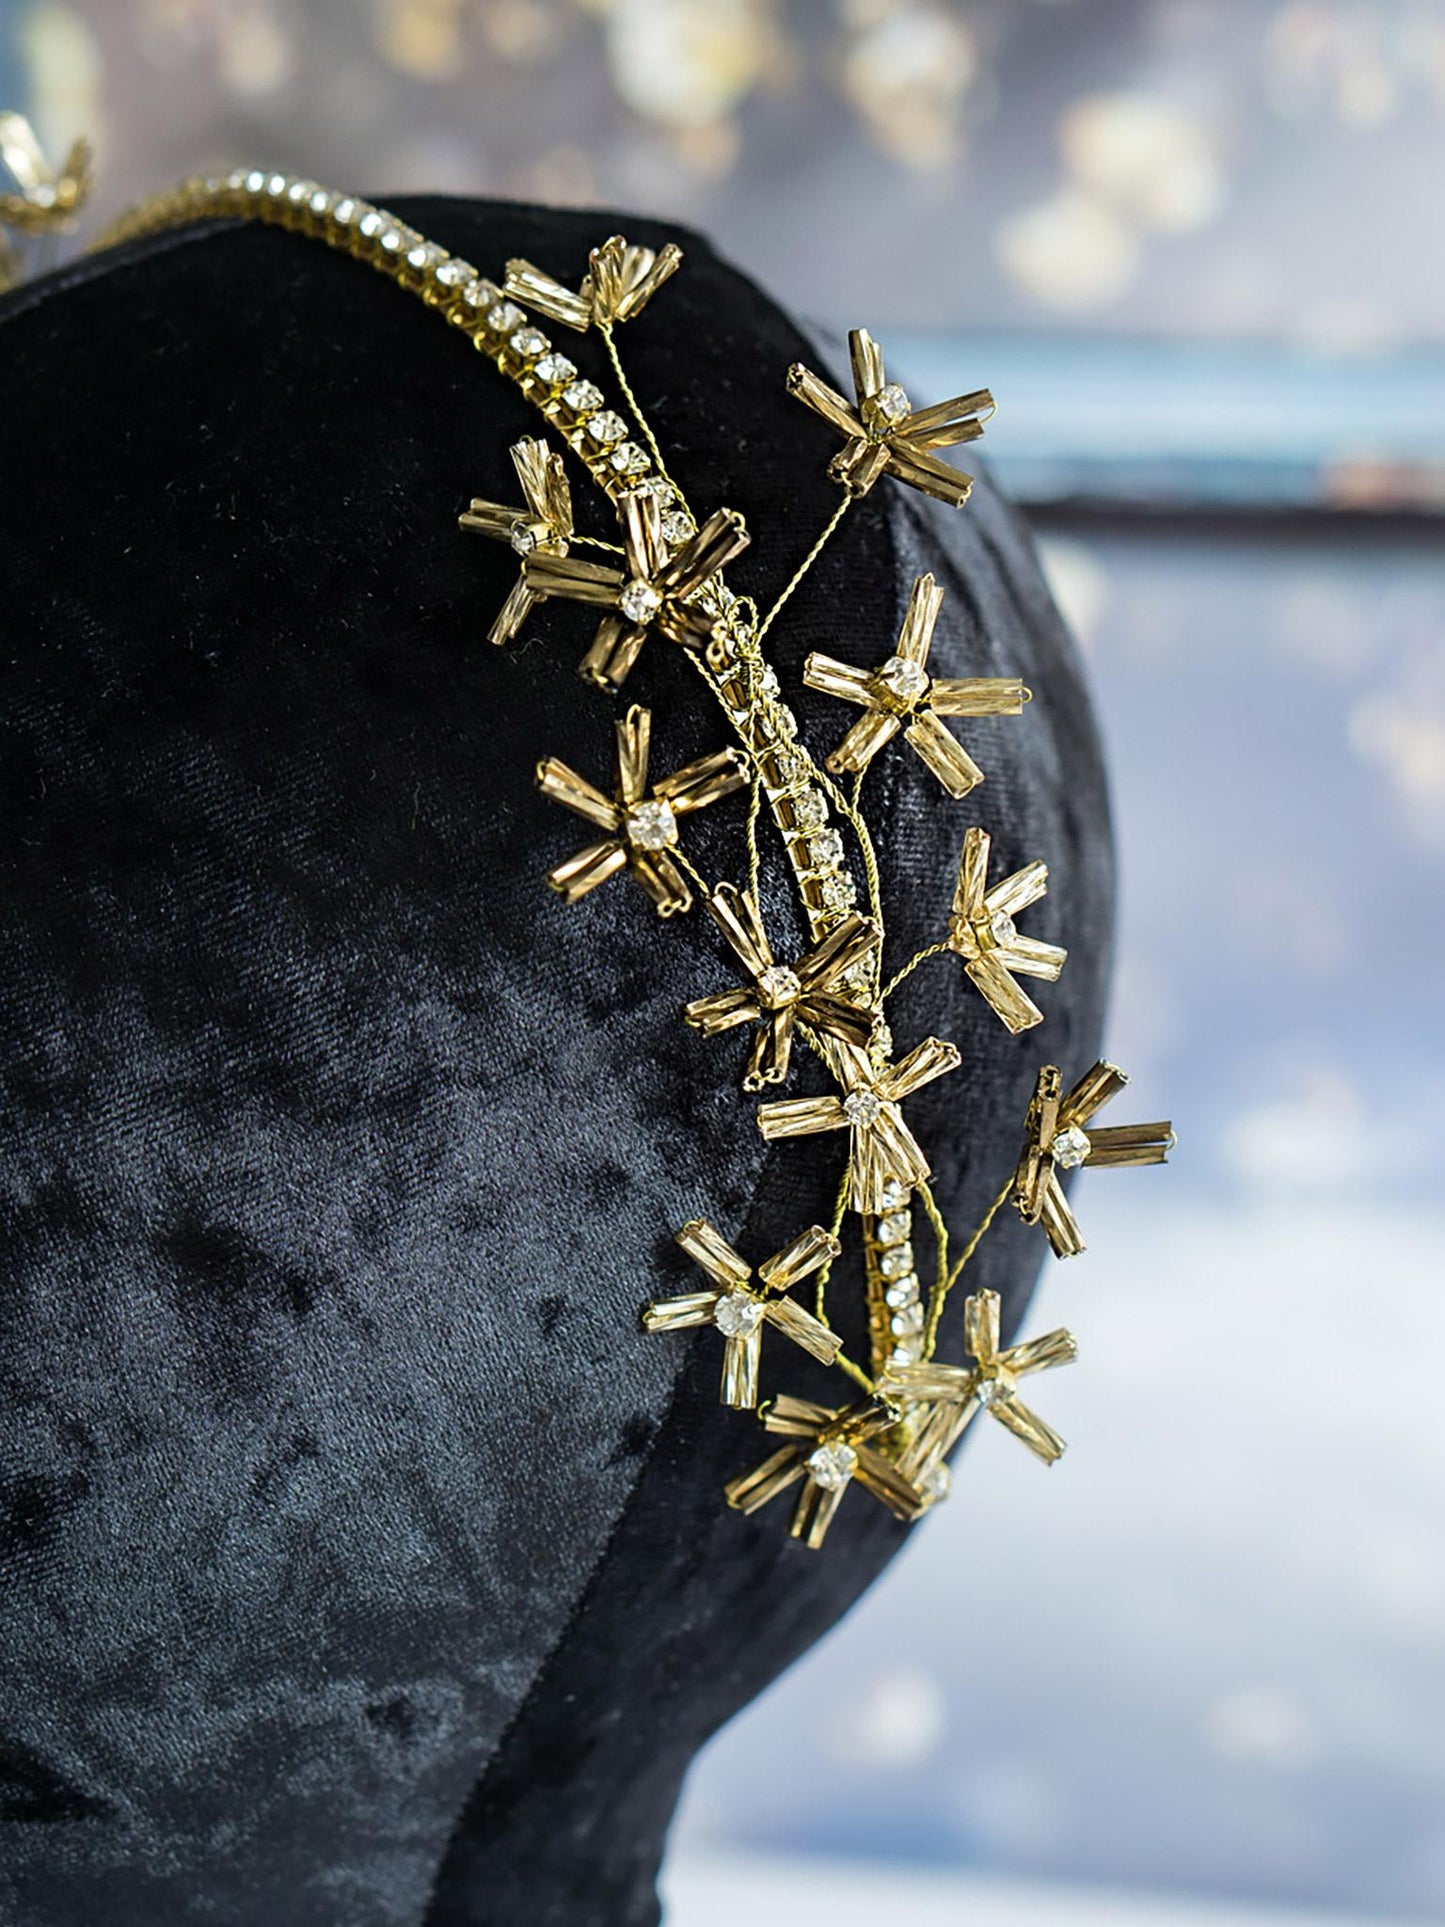 Floral Gold Tiara Headband for Glamorous Hairstyles